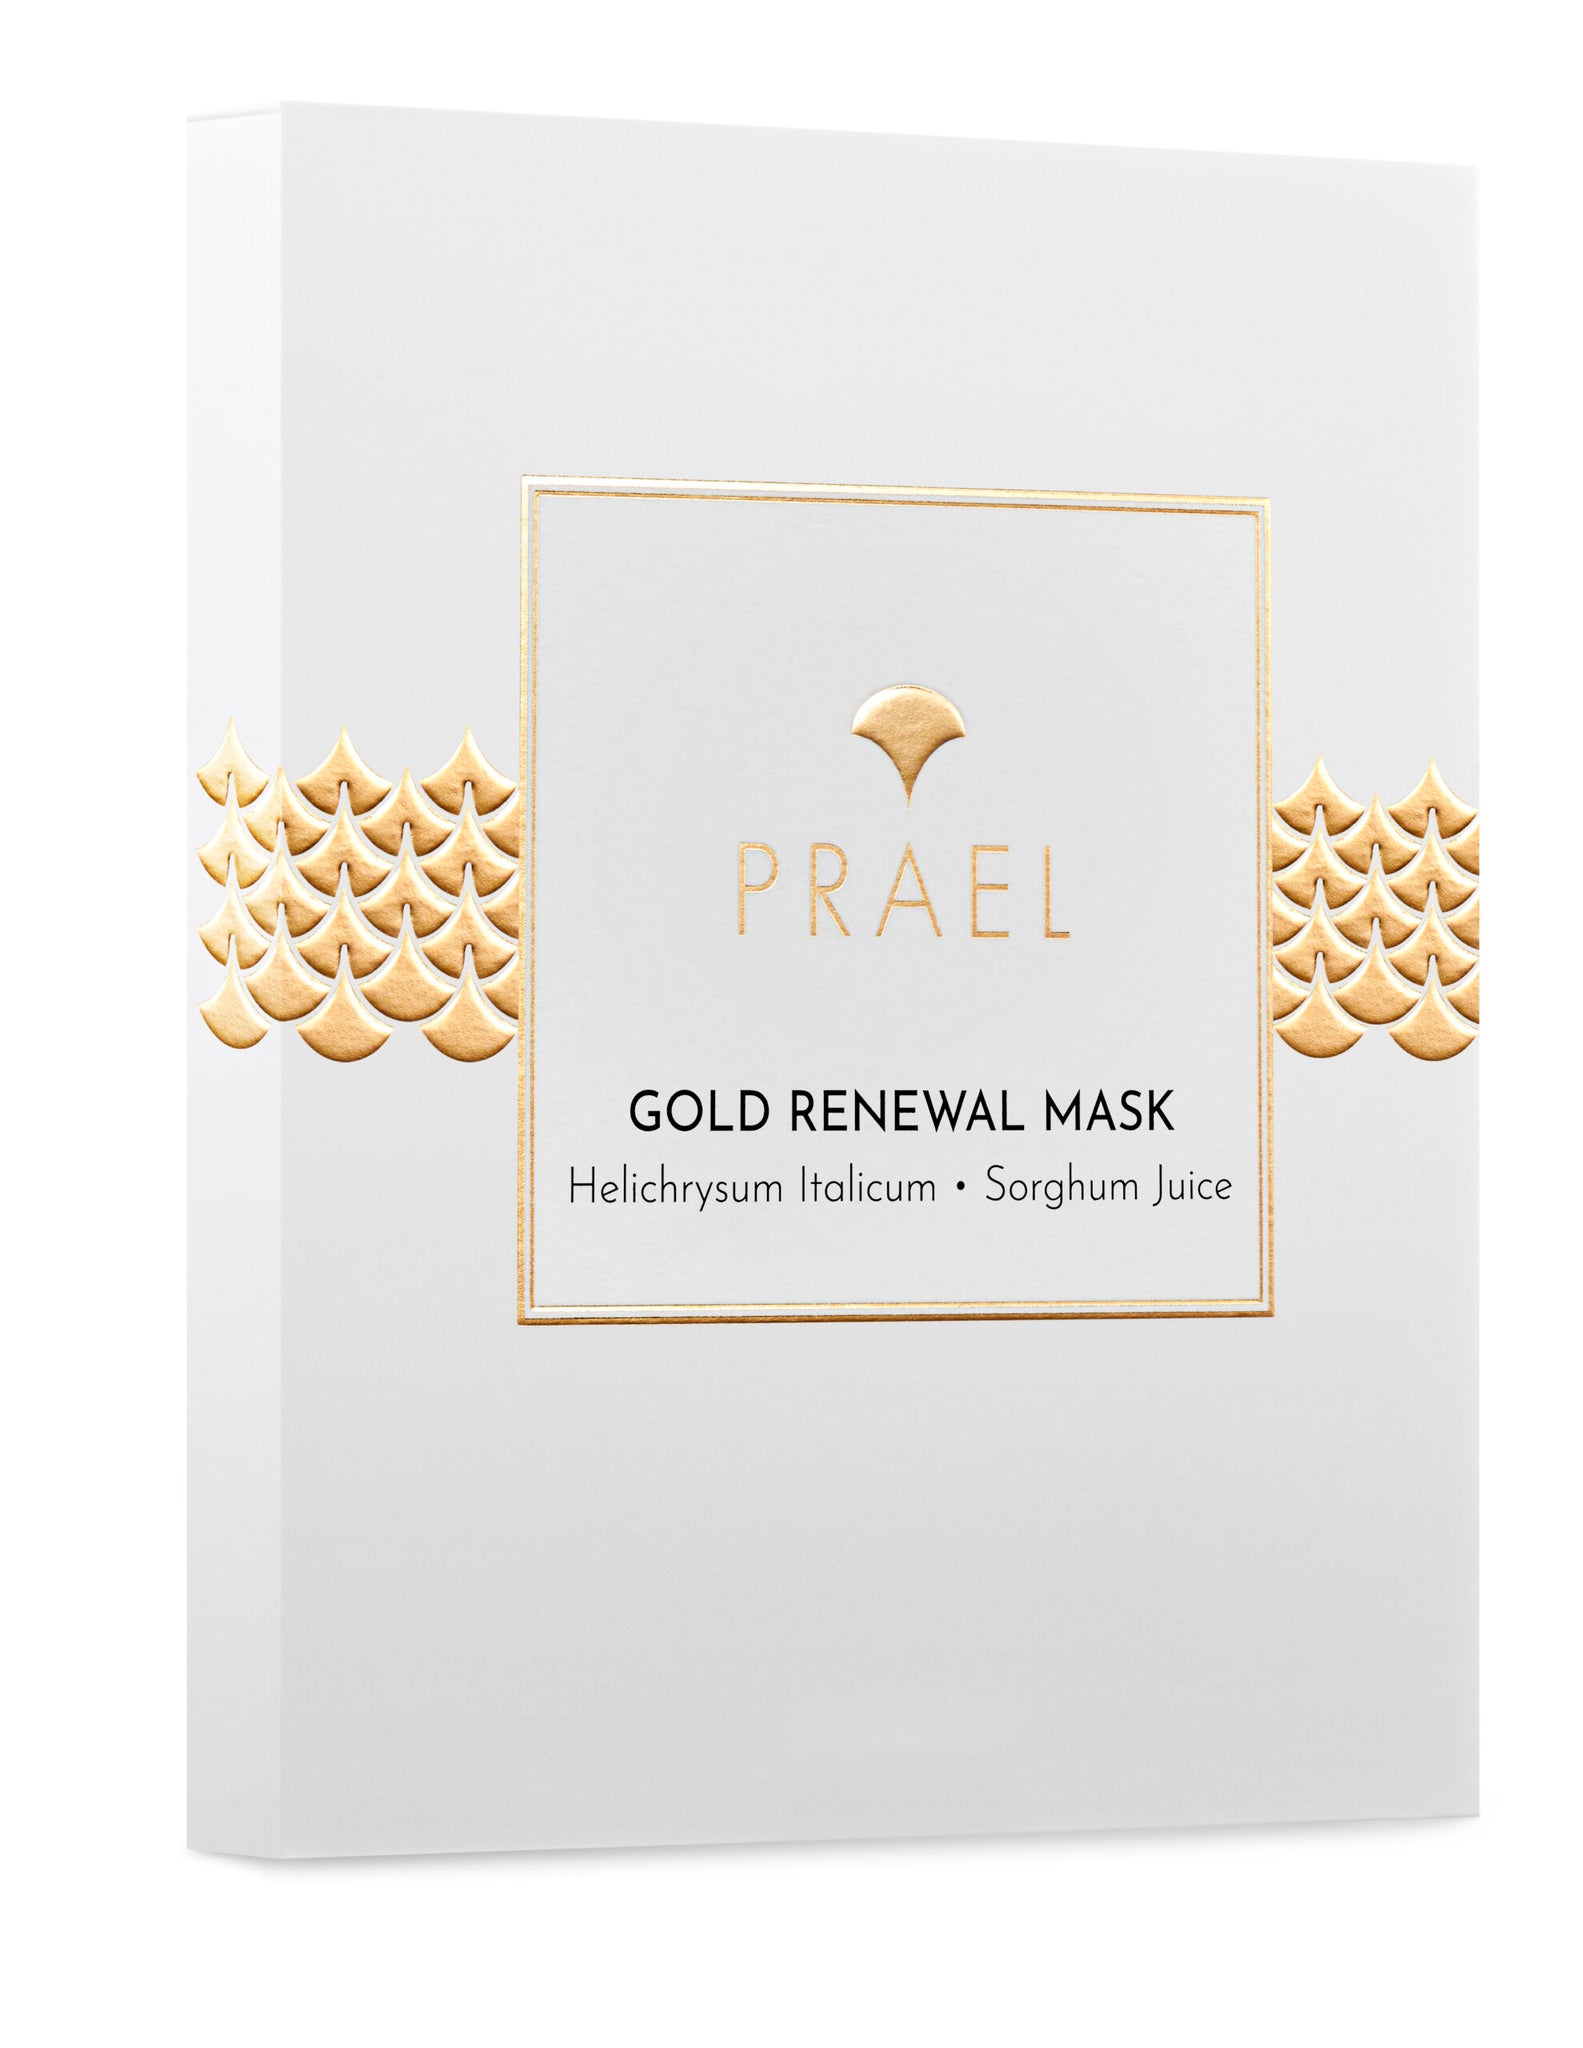 Gold renewal mask